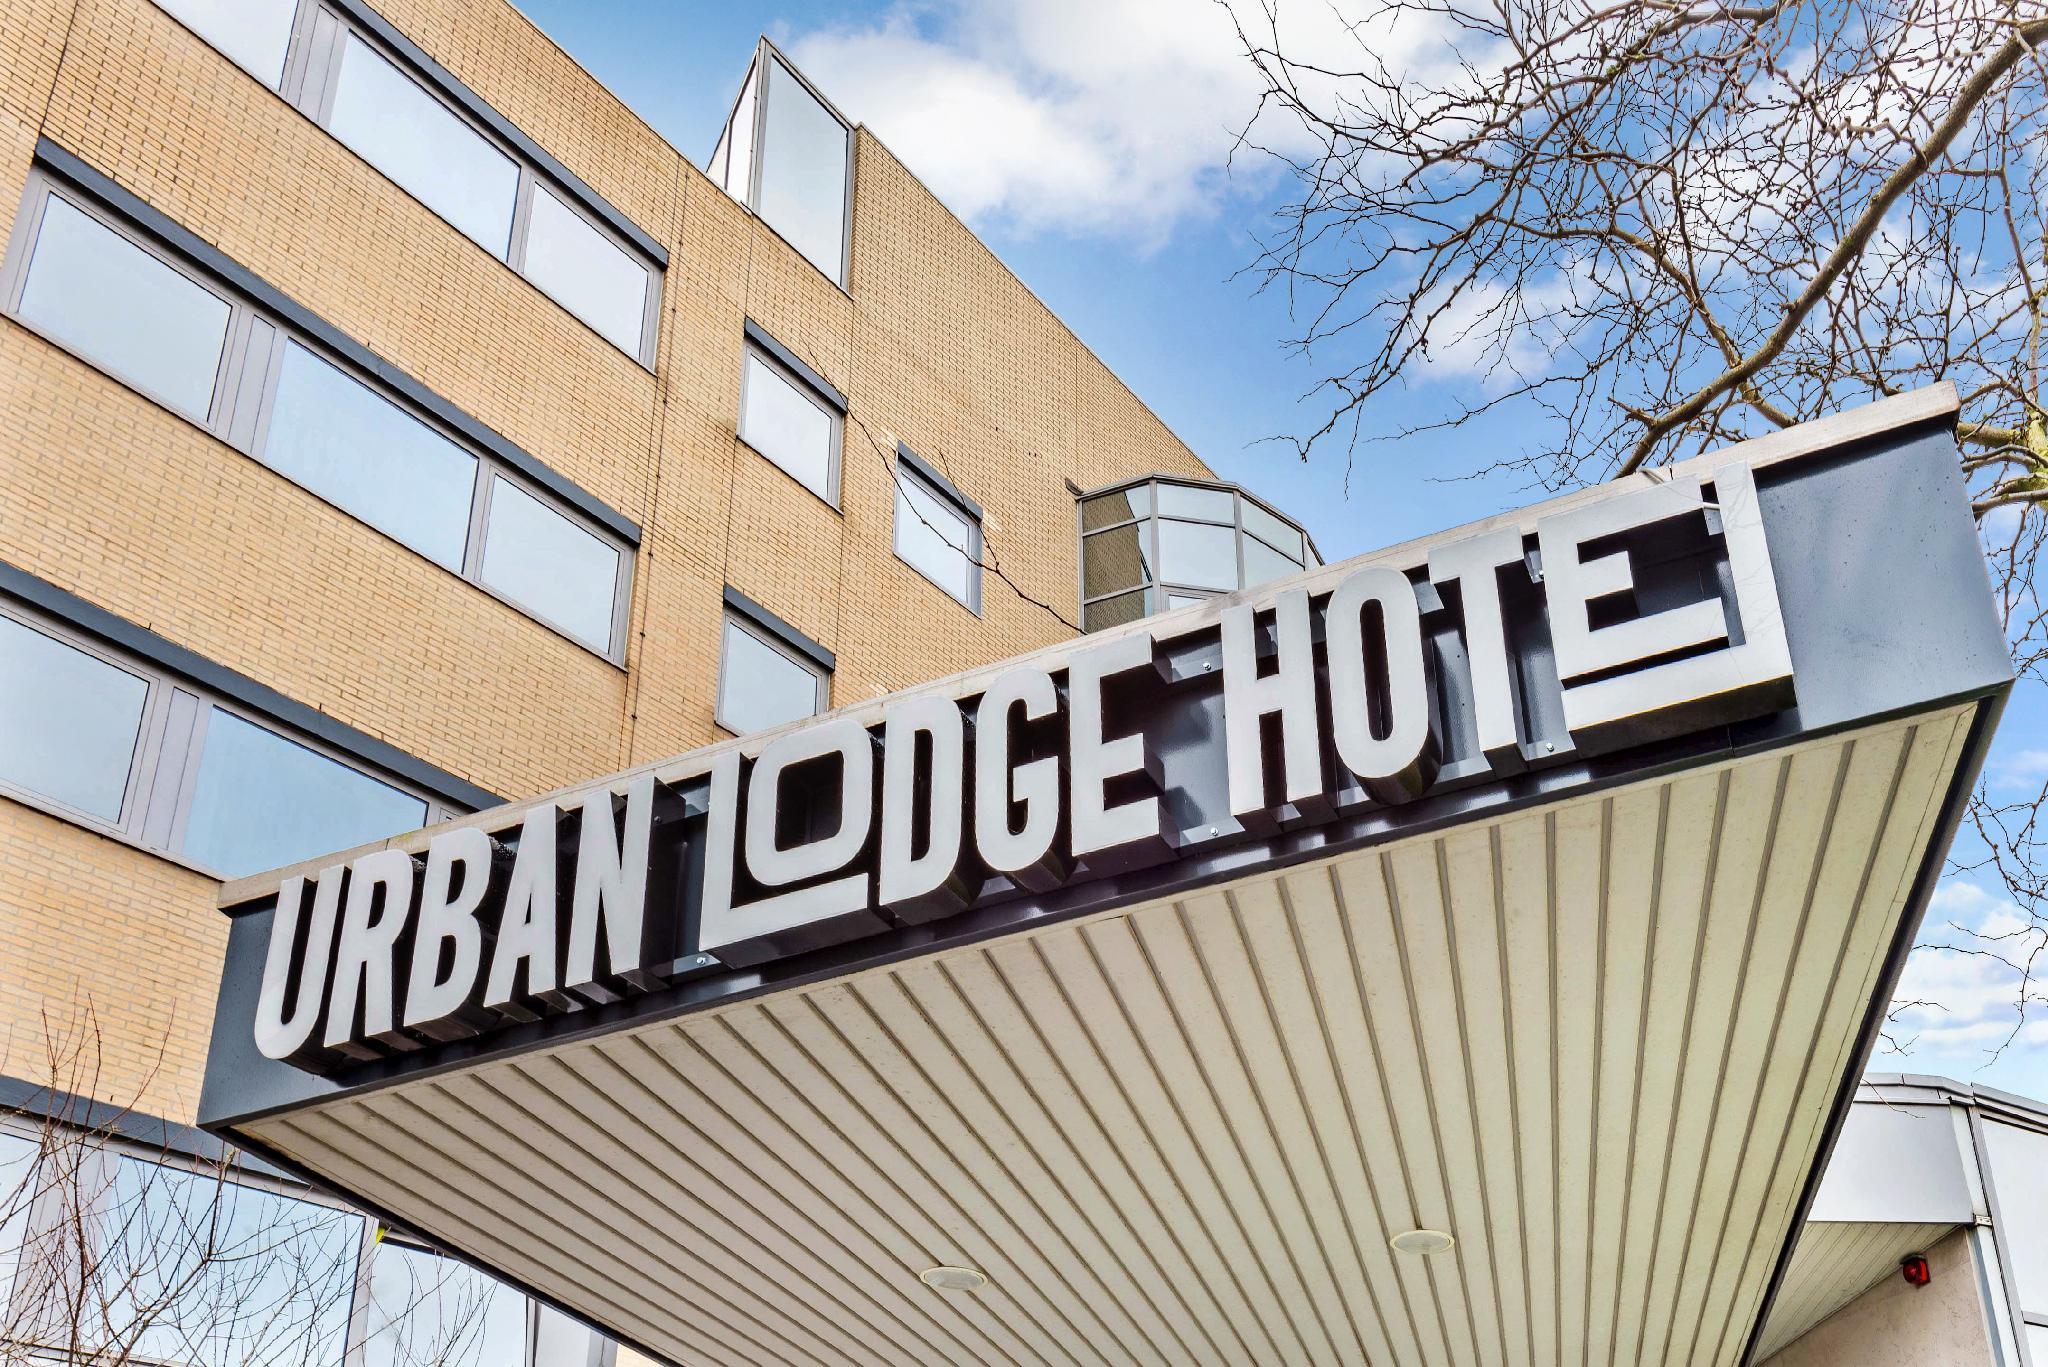 Urban Lodge Hotel